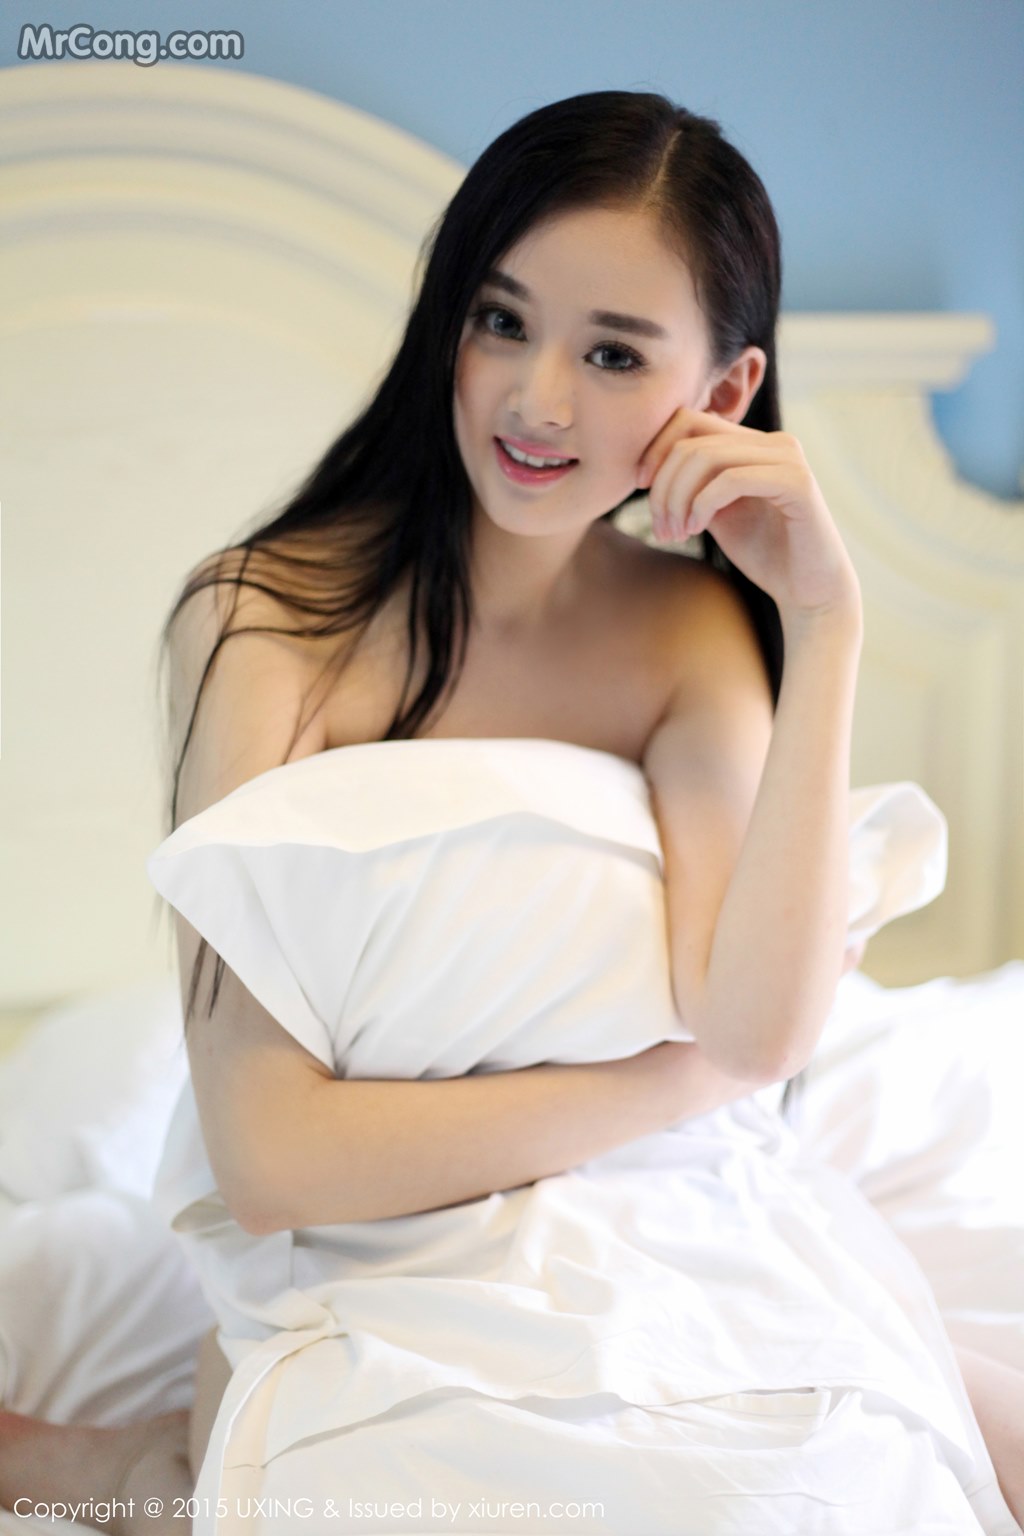 UXING Vol.029: Model Wen Xin Baby (温馨 baby) (50 photos) photo 2-15